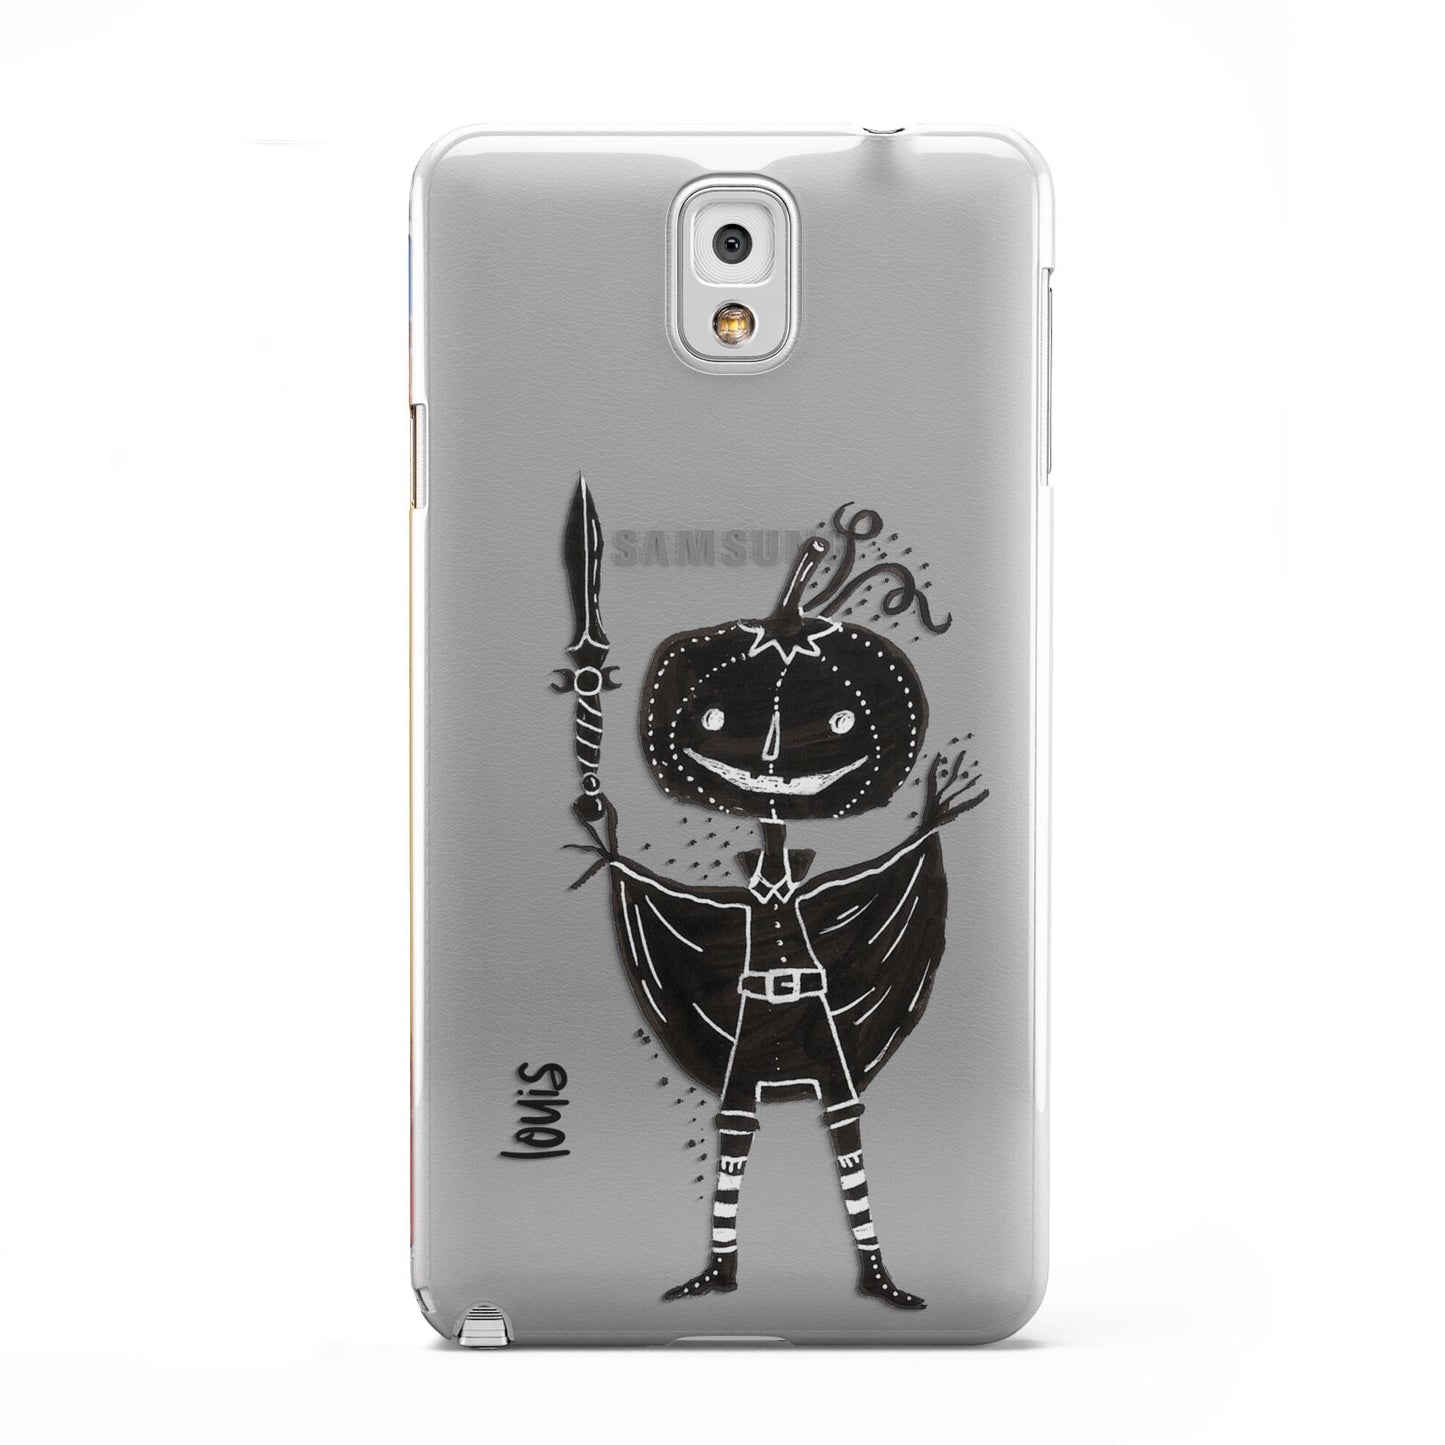 Pumpkin Head Personalised Samsung Galaxy Note 3 Case